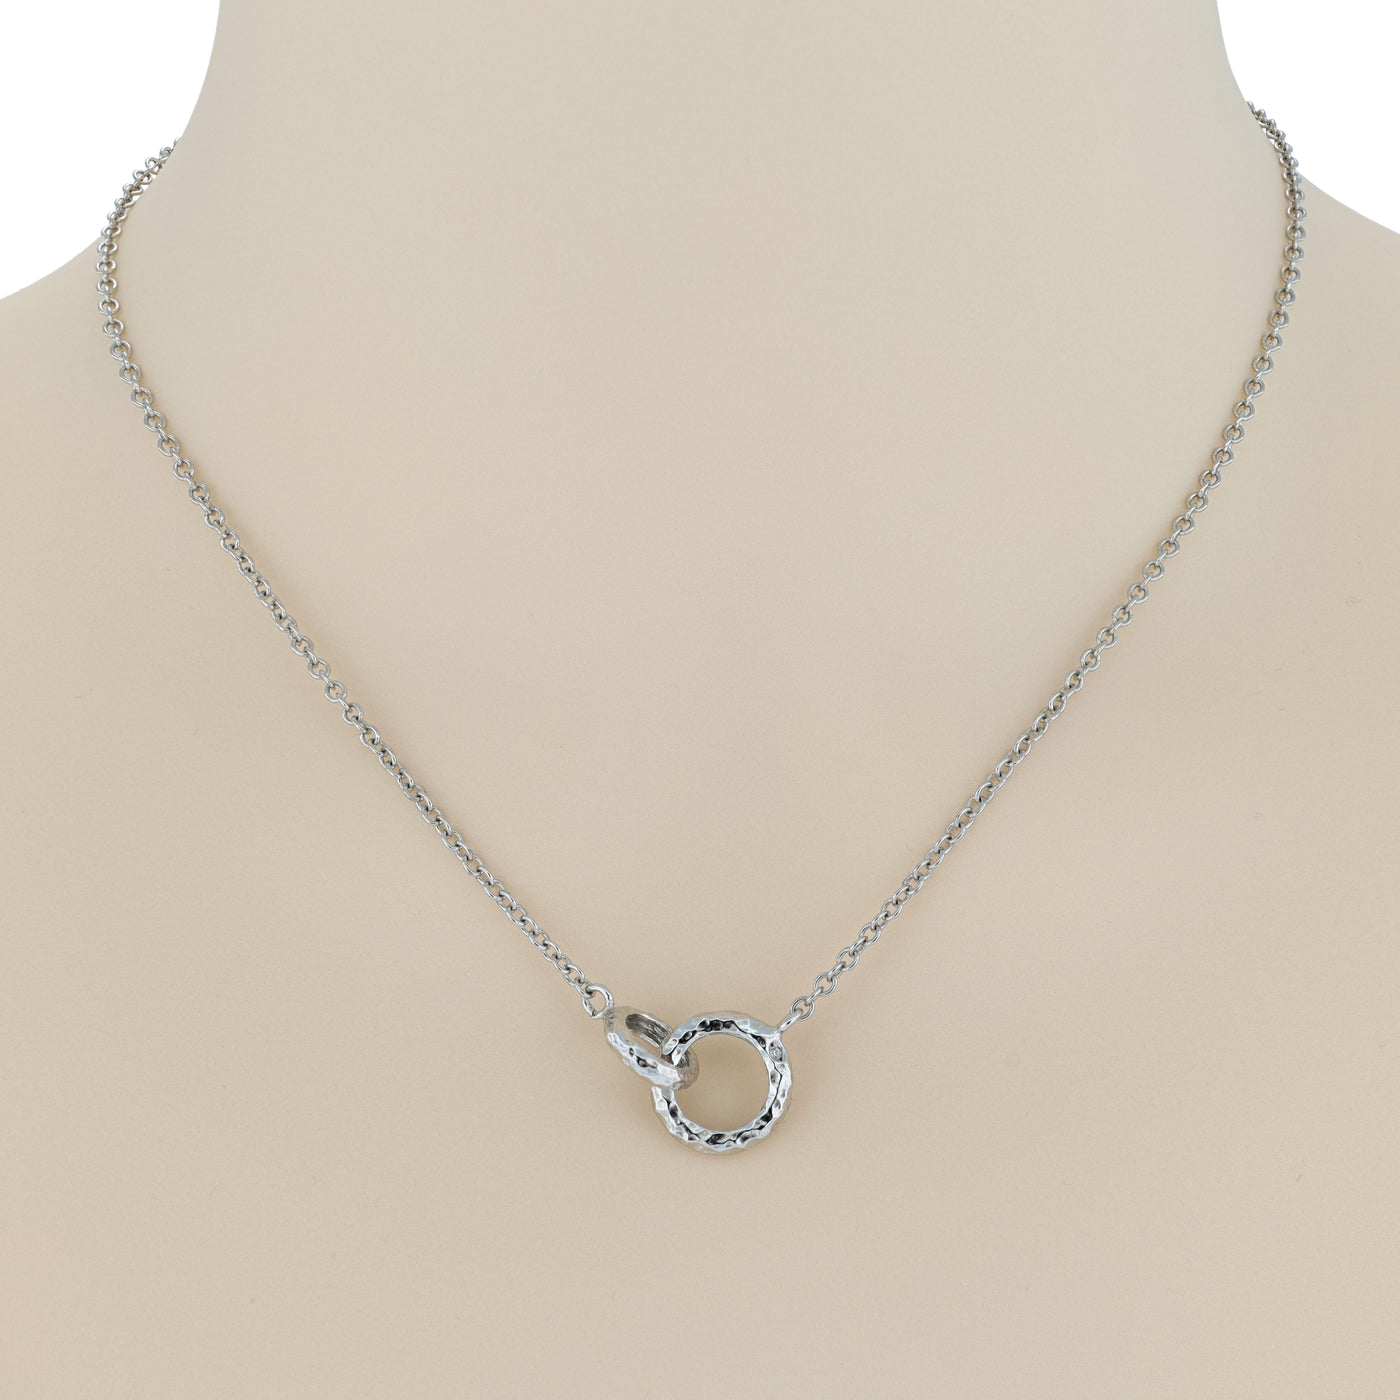 IL Diletto - 925 Italian Silver Necklace, Connecting Rings, Molten Finish, White CZ, 42+5cm, Rhodium Plated